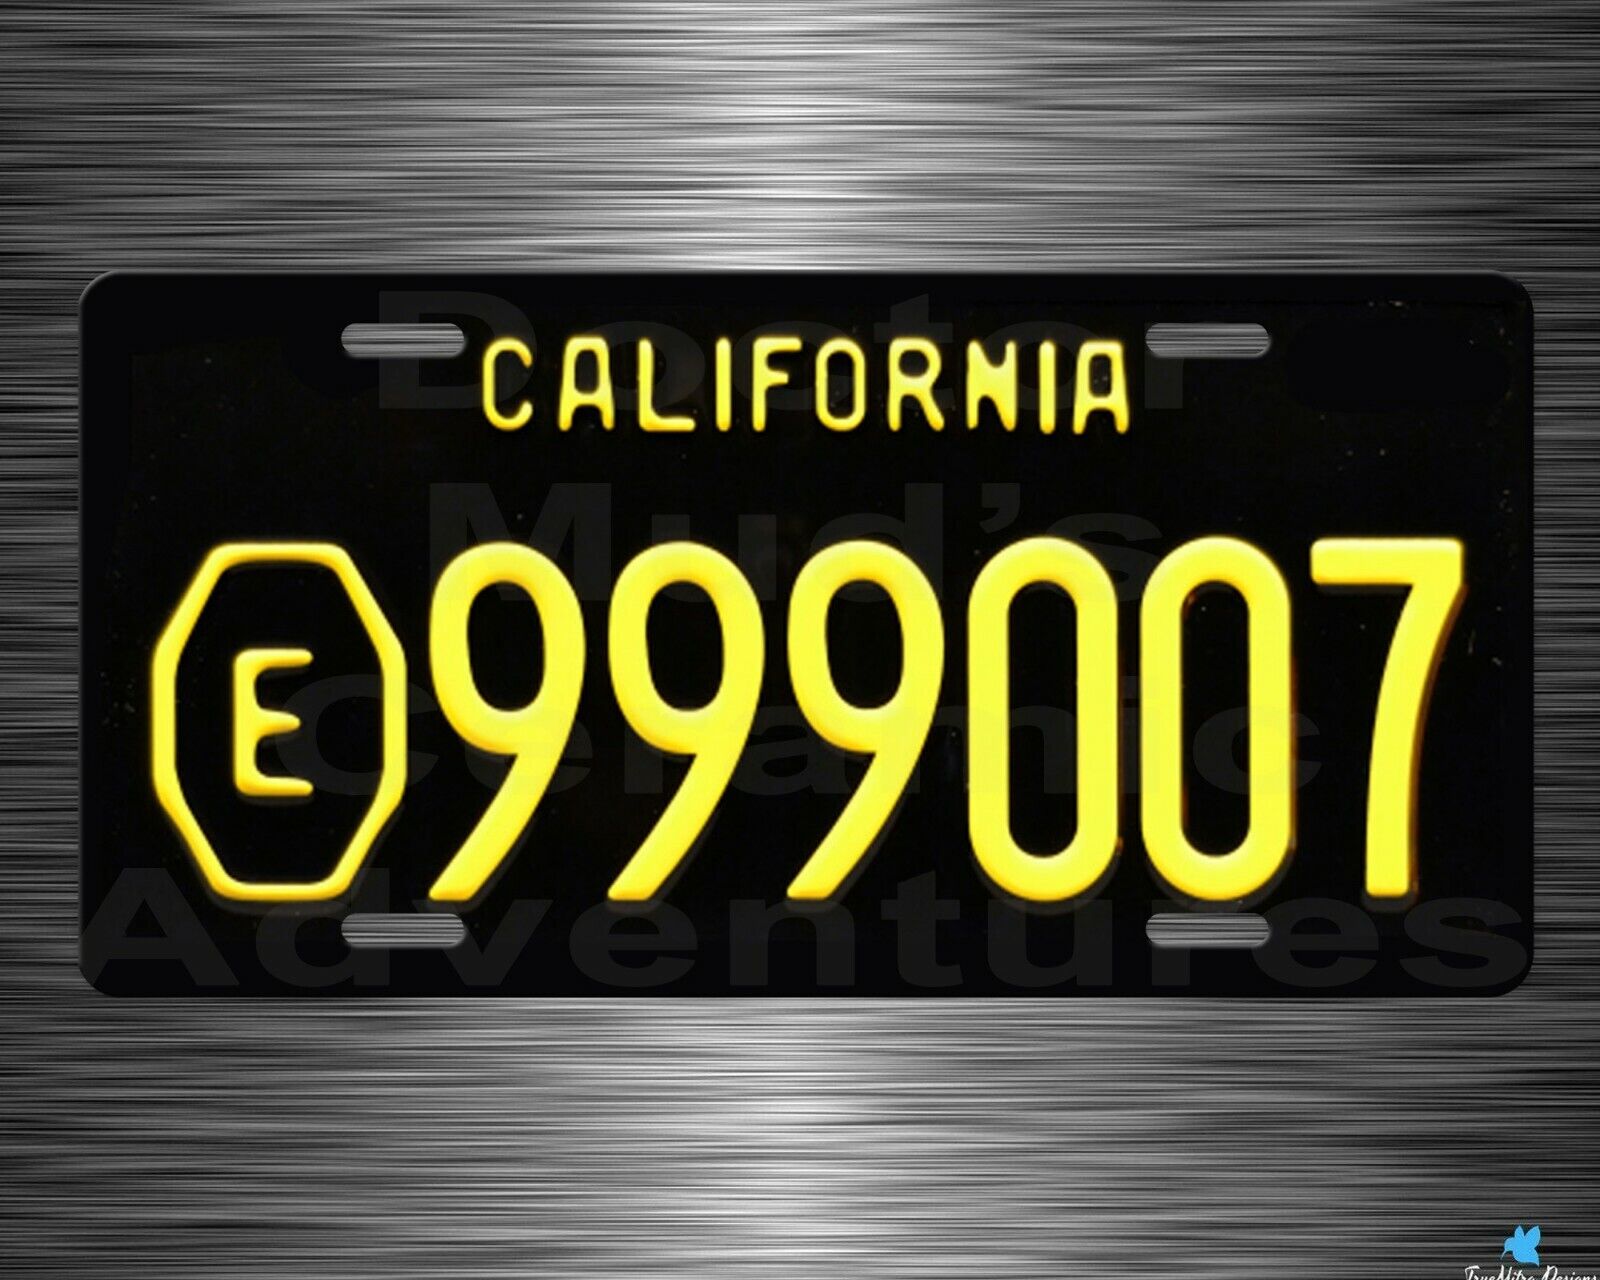 LA County Squad 51 Emergency Metal License Plate 999007 - READ DESCRIPTION